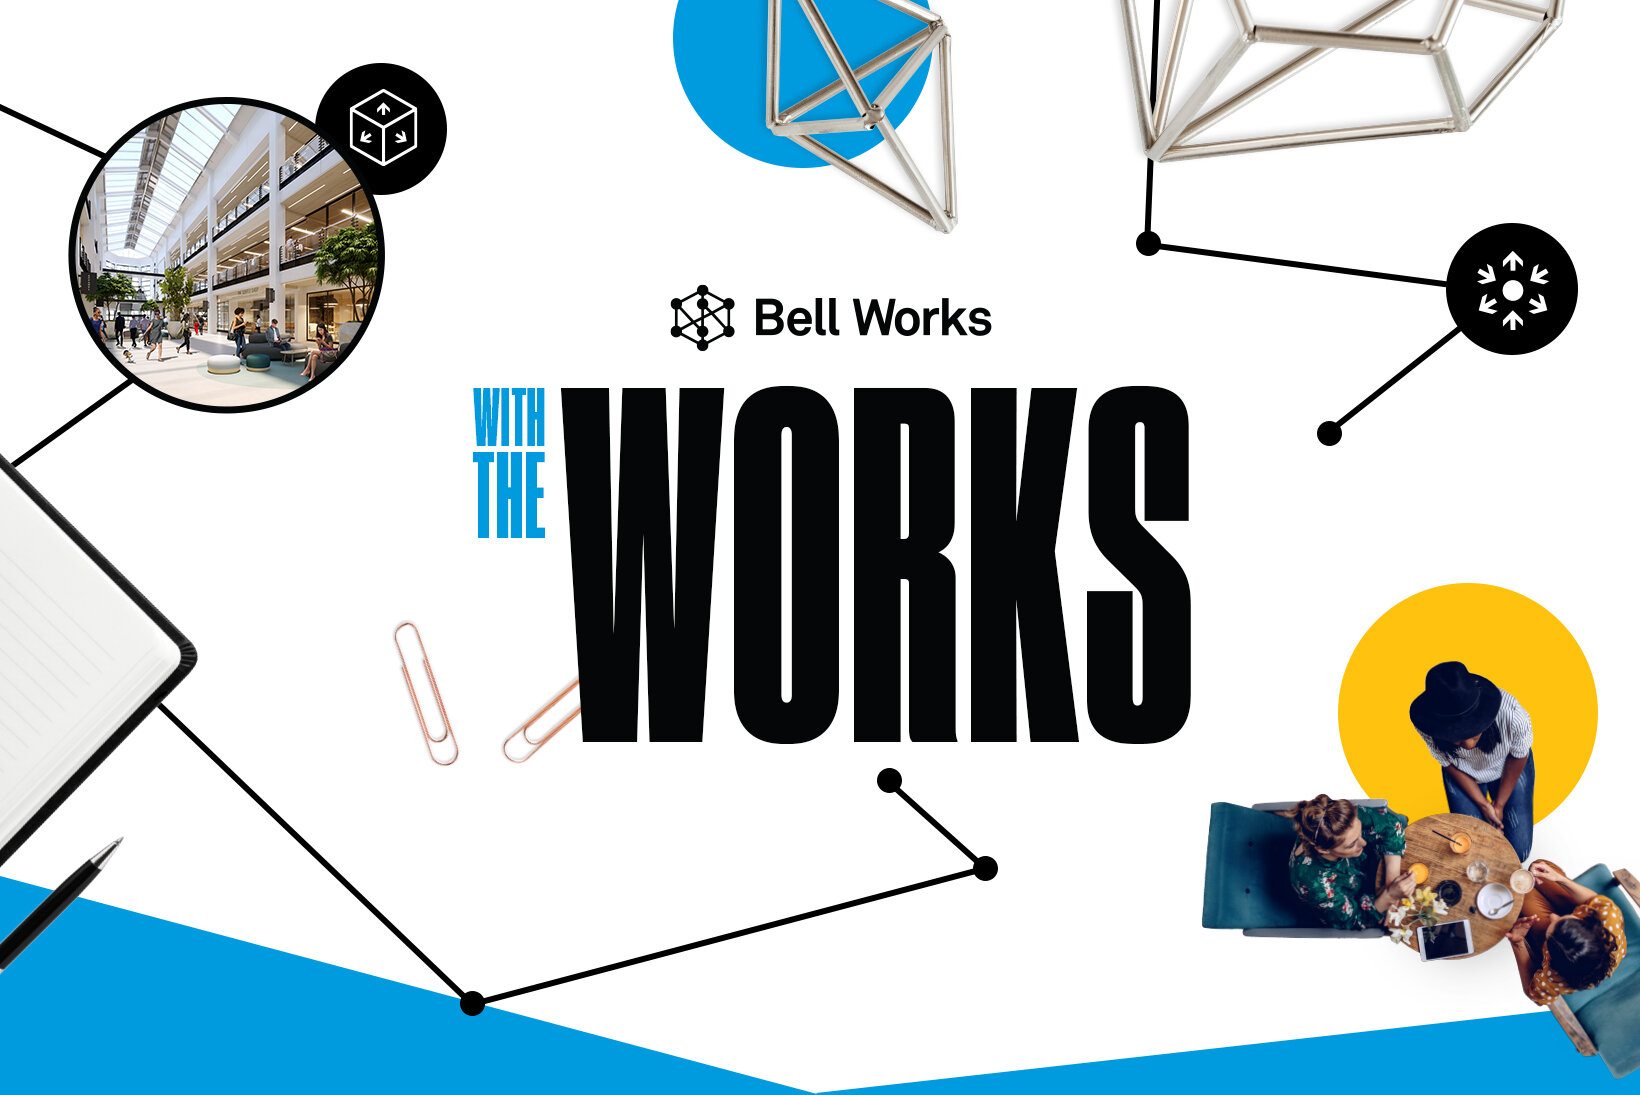 bell-works_marketing_4_original.jpg